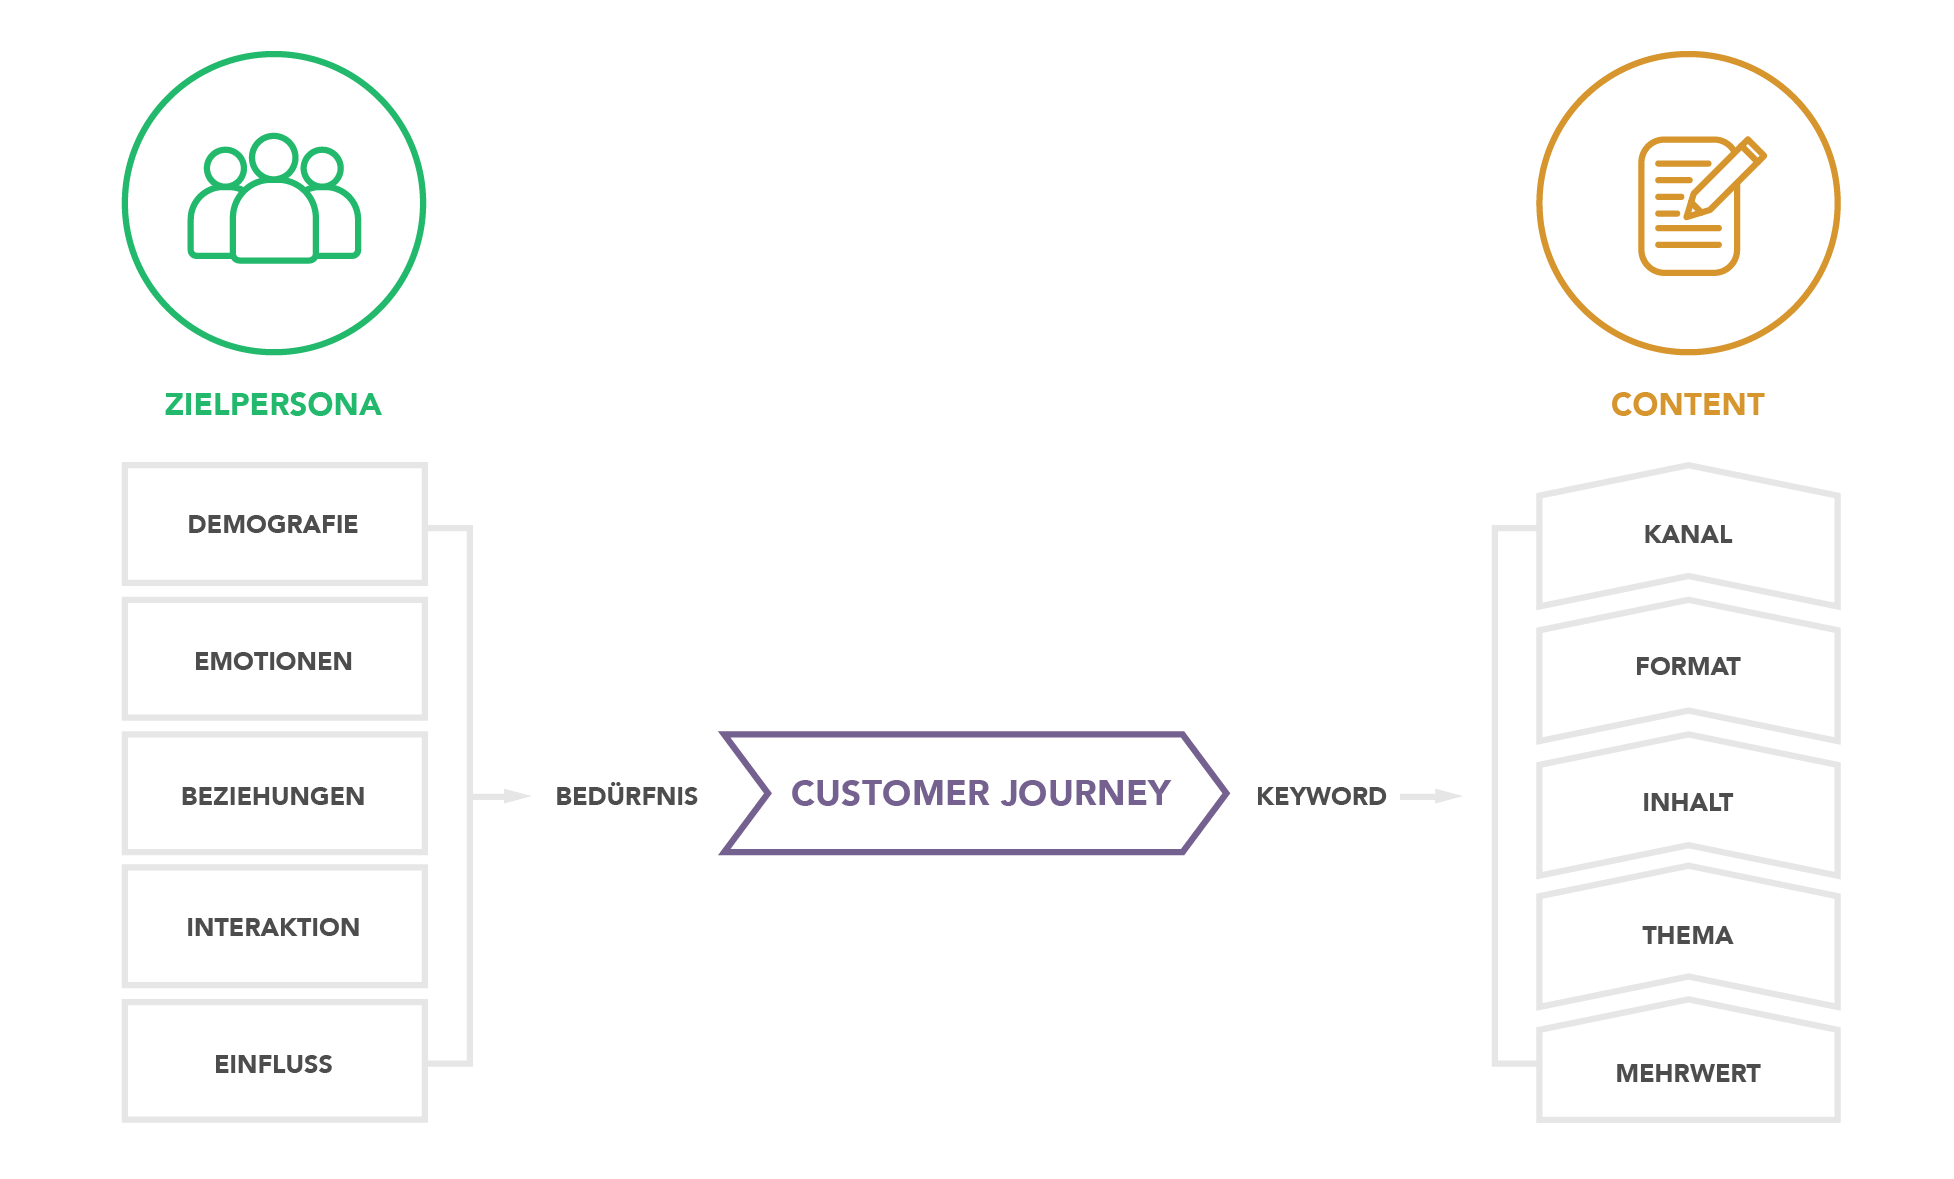 Content Marketing Customer Journey